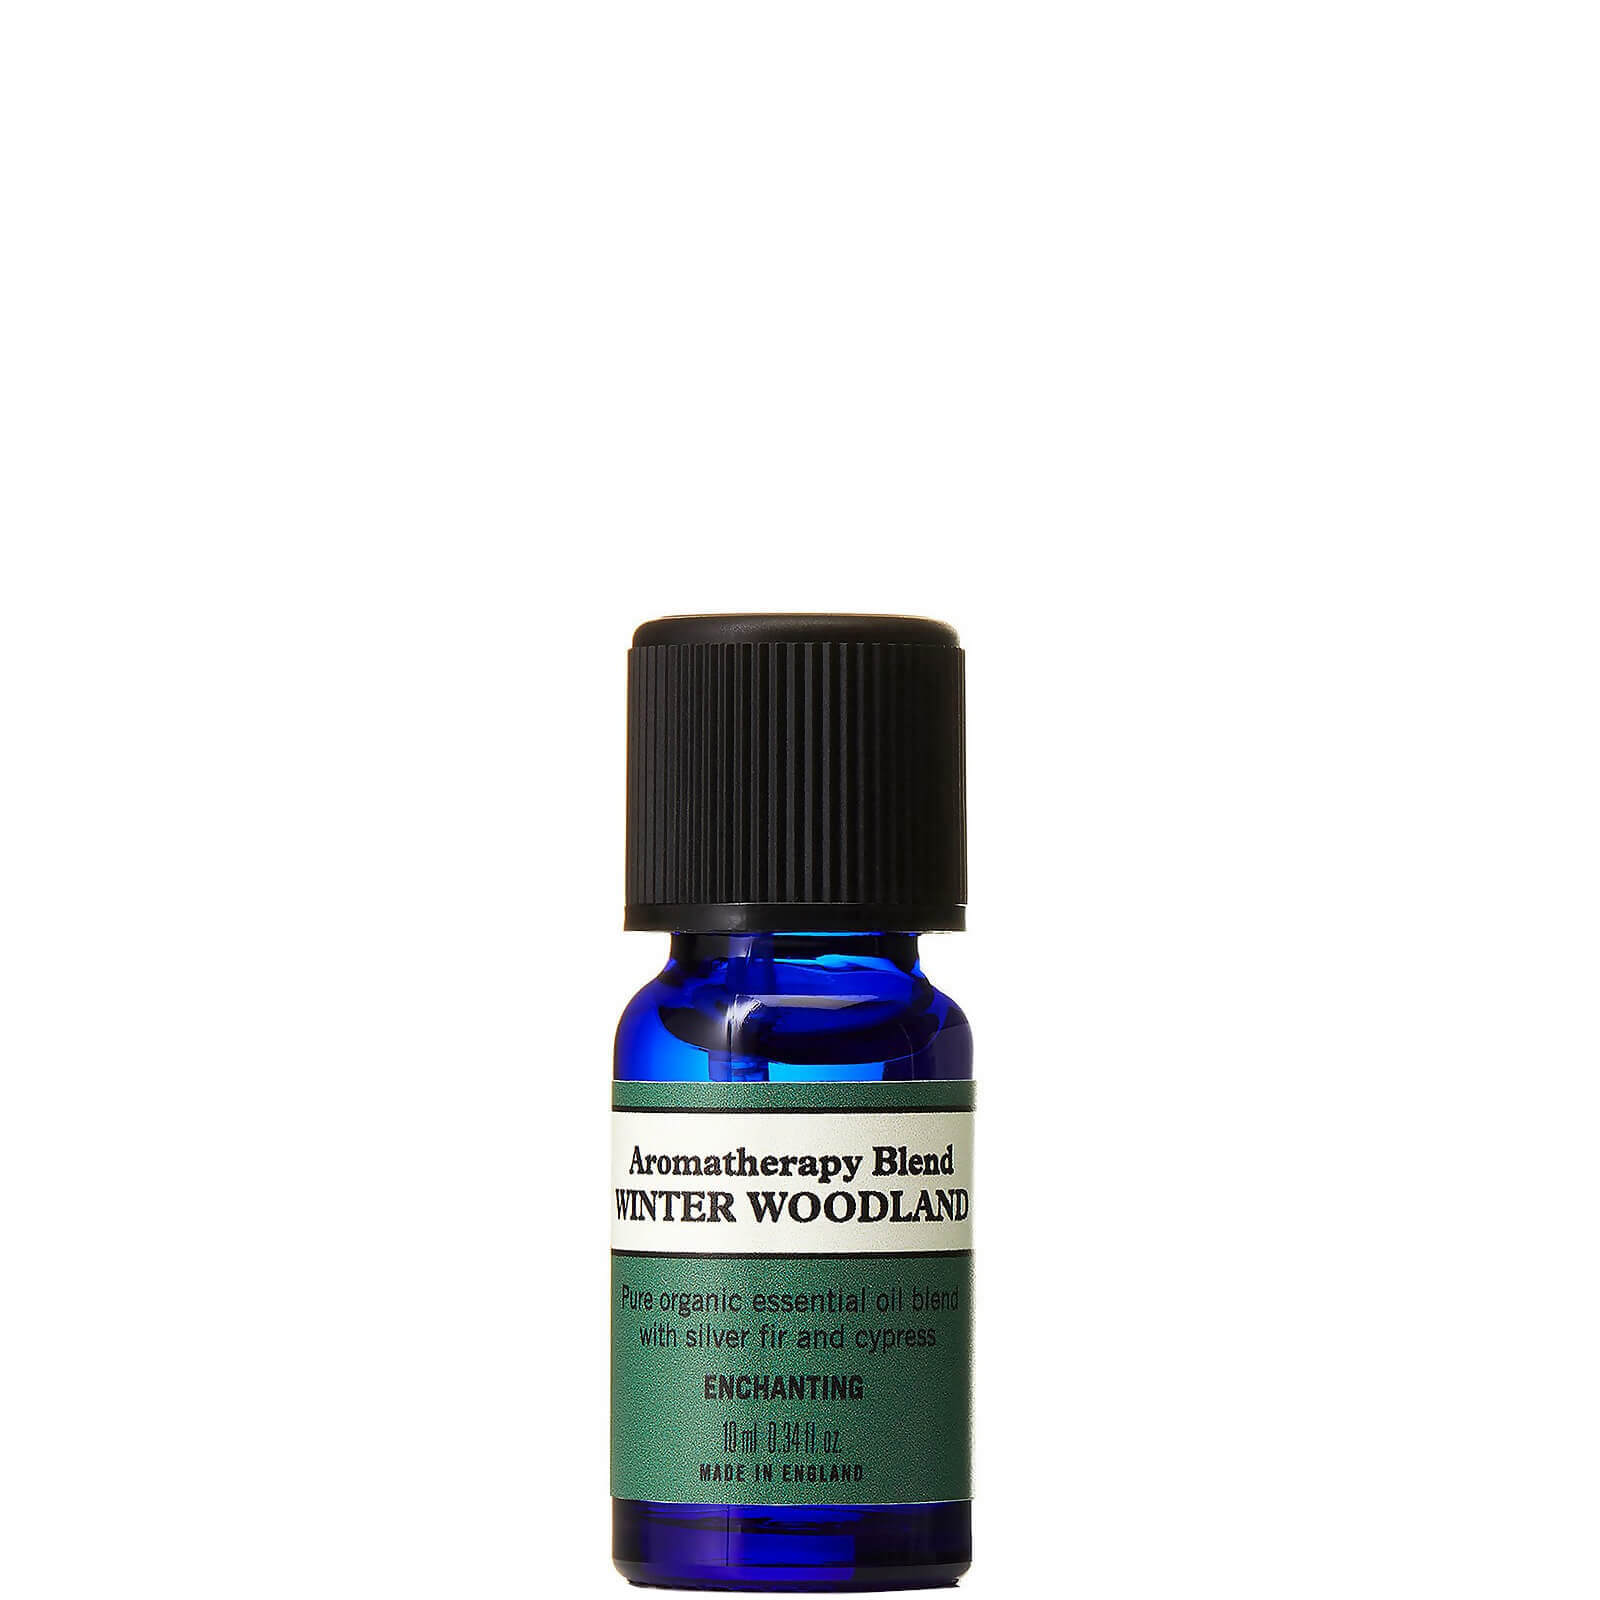 Neal's Yard Remedies Winter Woodland Aromatherapy Blend 10ml